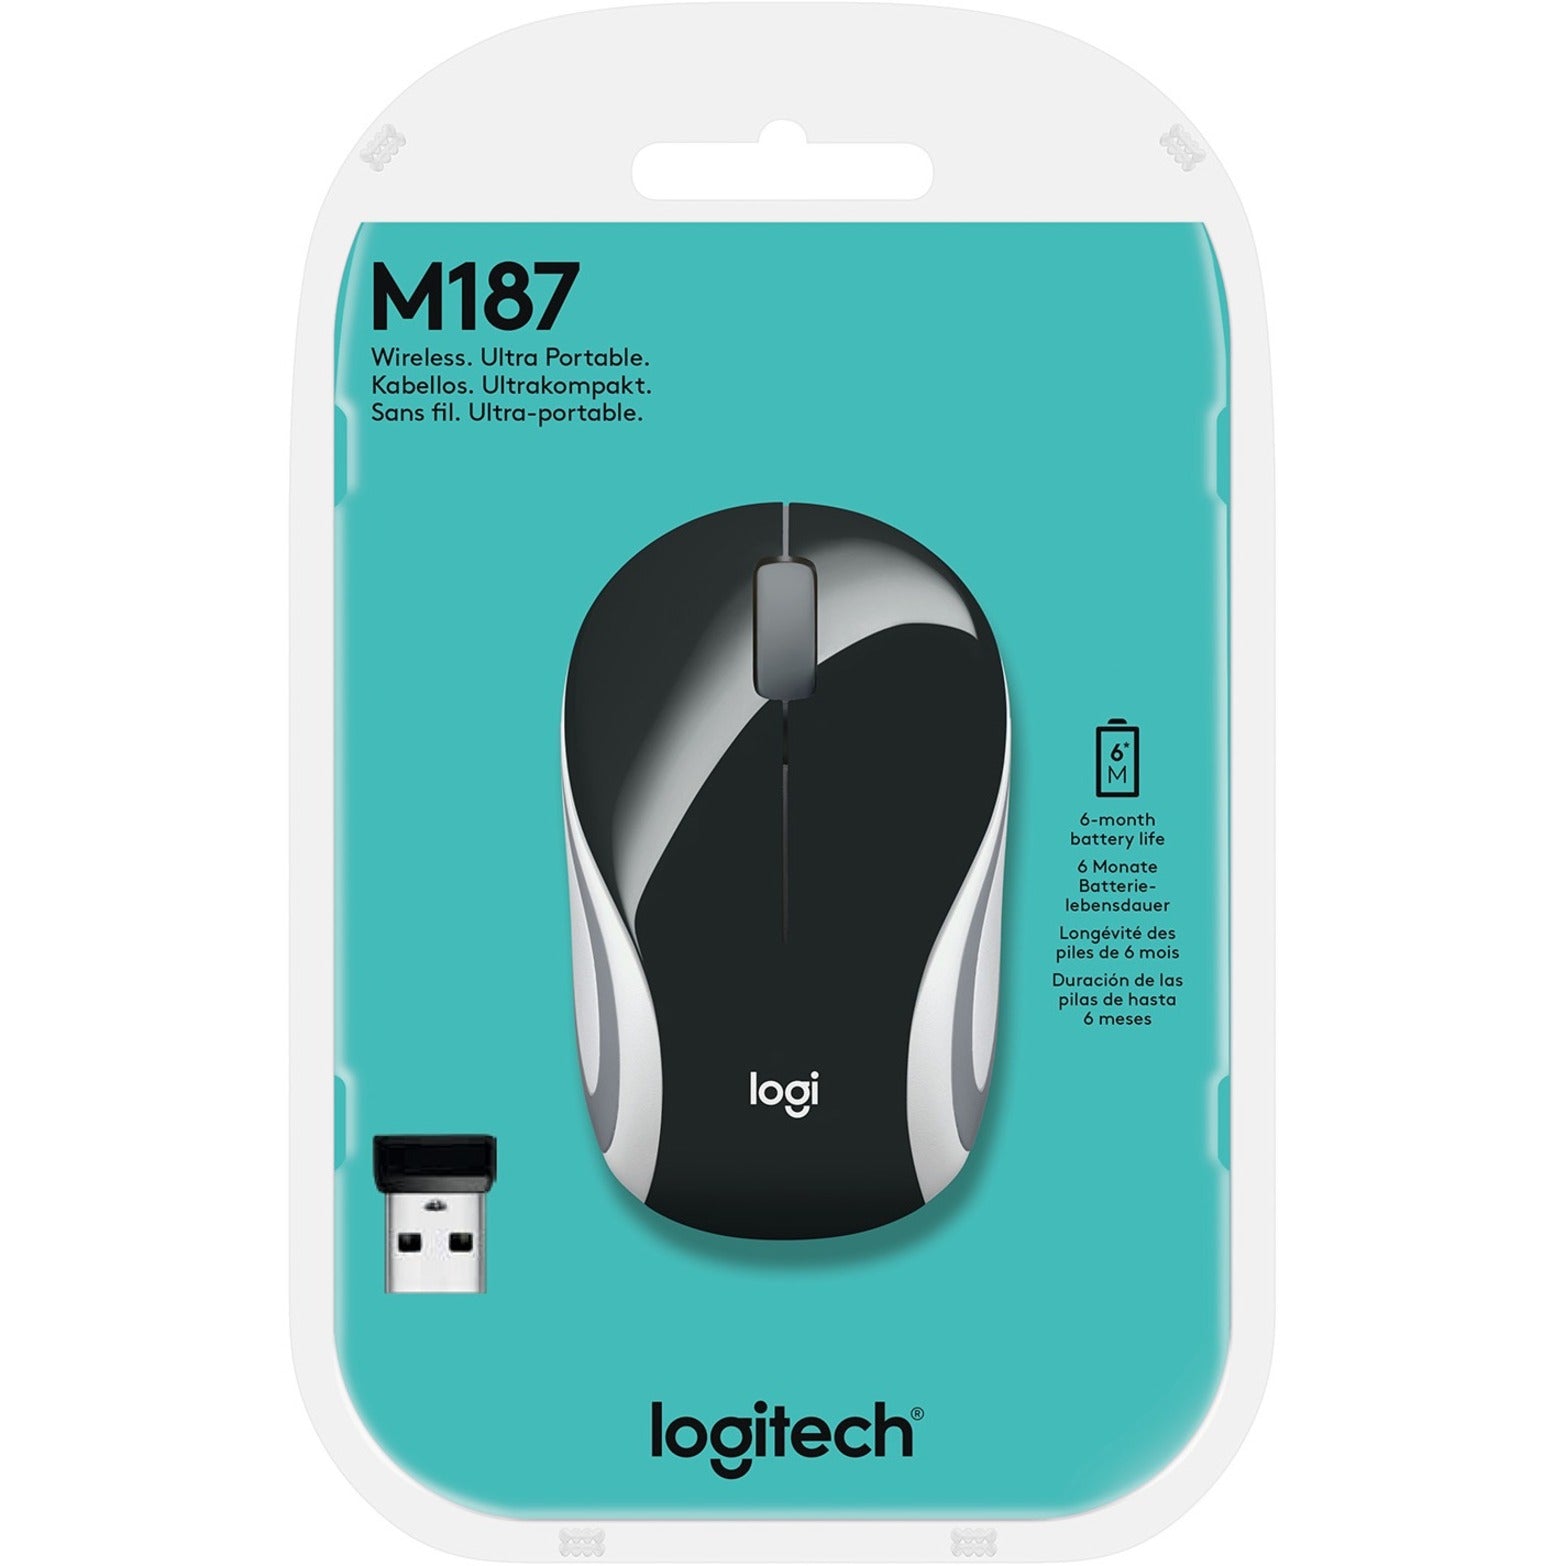 Logitech 910-005459 Wireless Ultra Portable M187 Mouse, 2.4 GHz, 1000 DPI Optical Tracking, 3-Buttons, PC/Mac/Laptop - Black